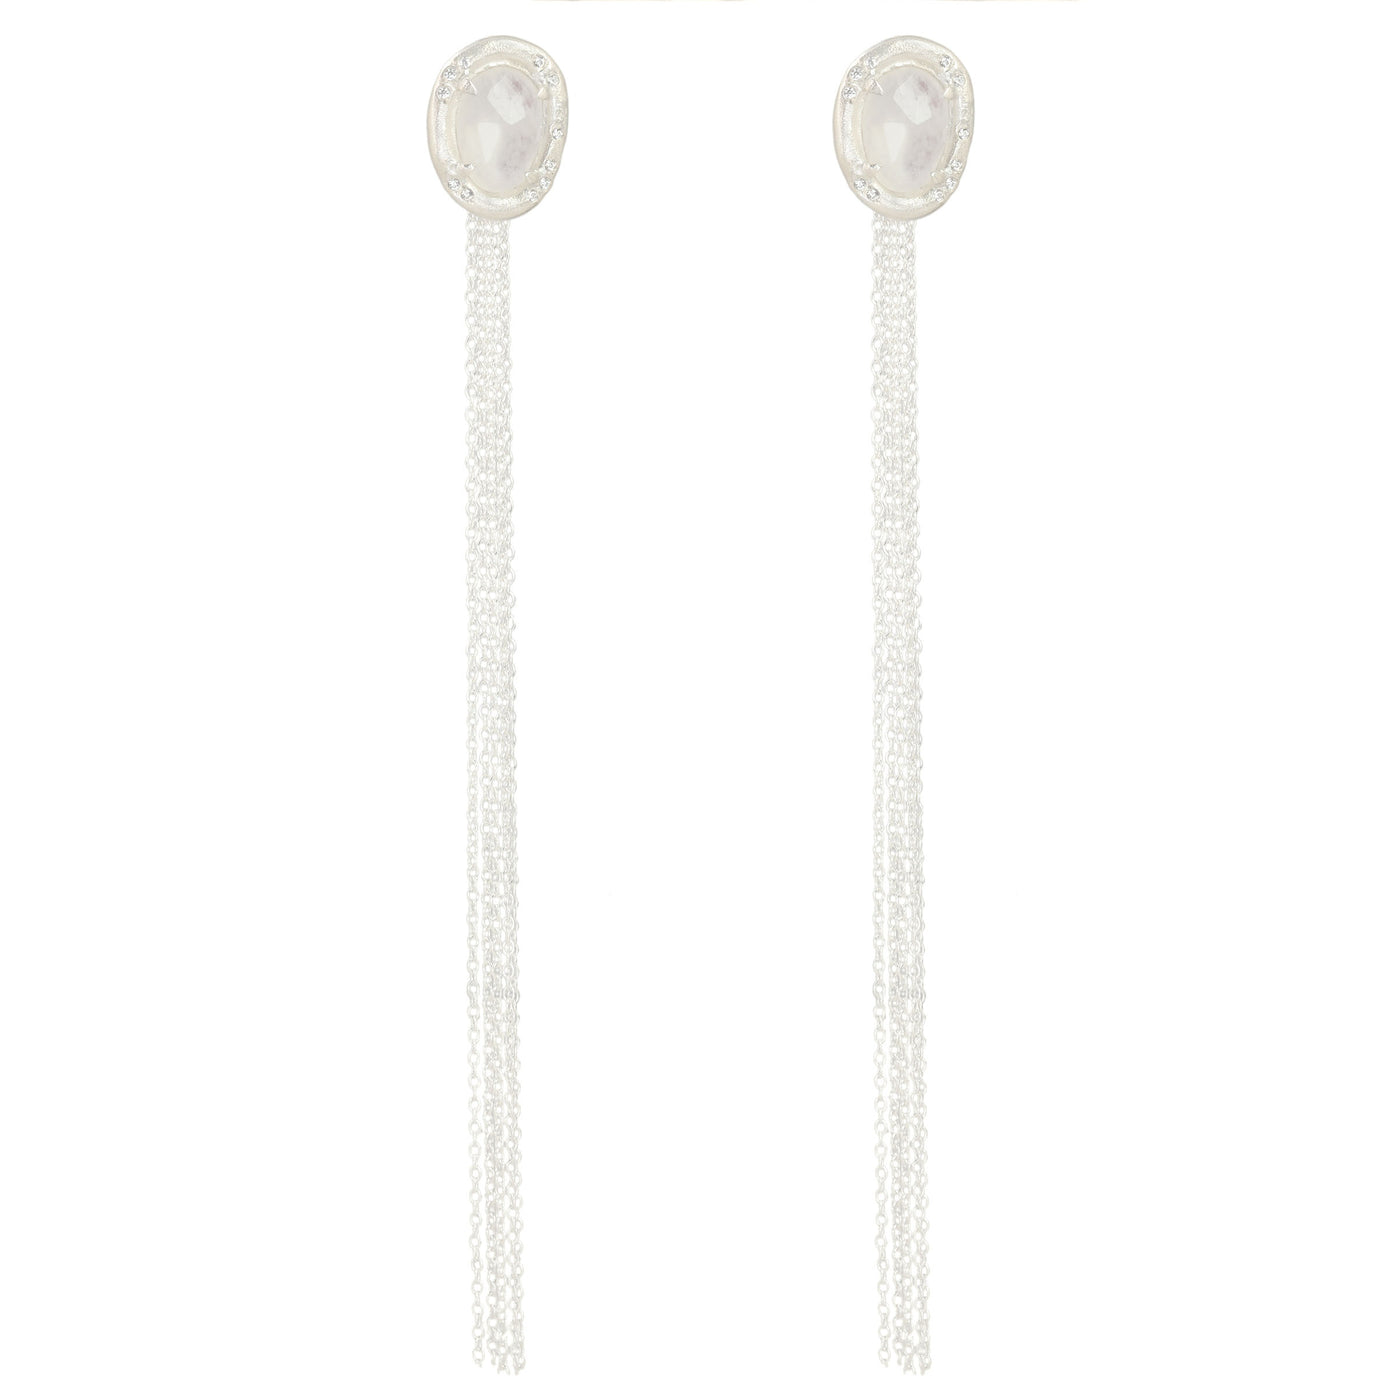 Almia earrings